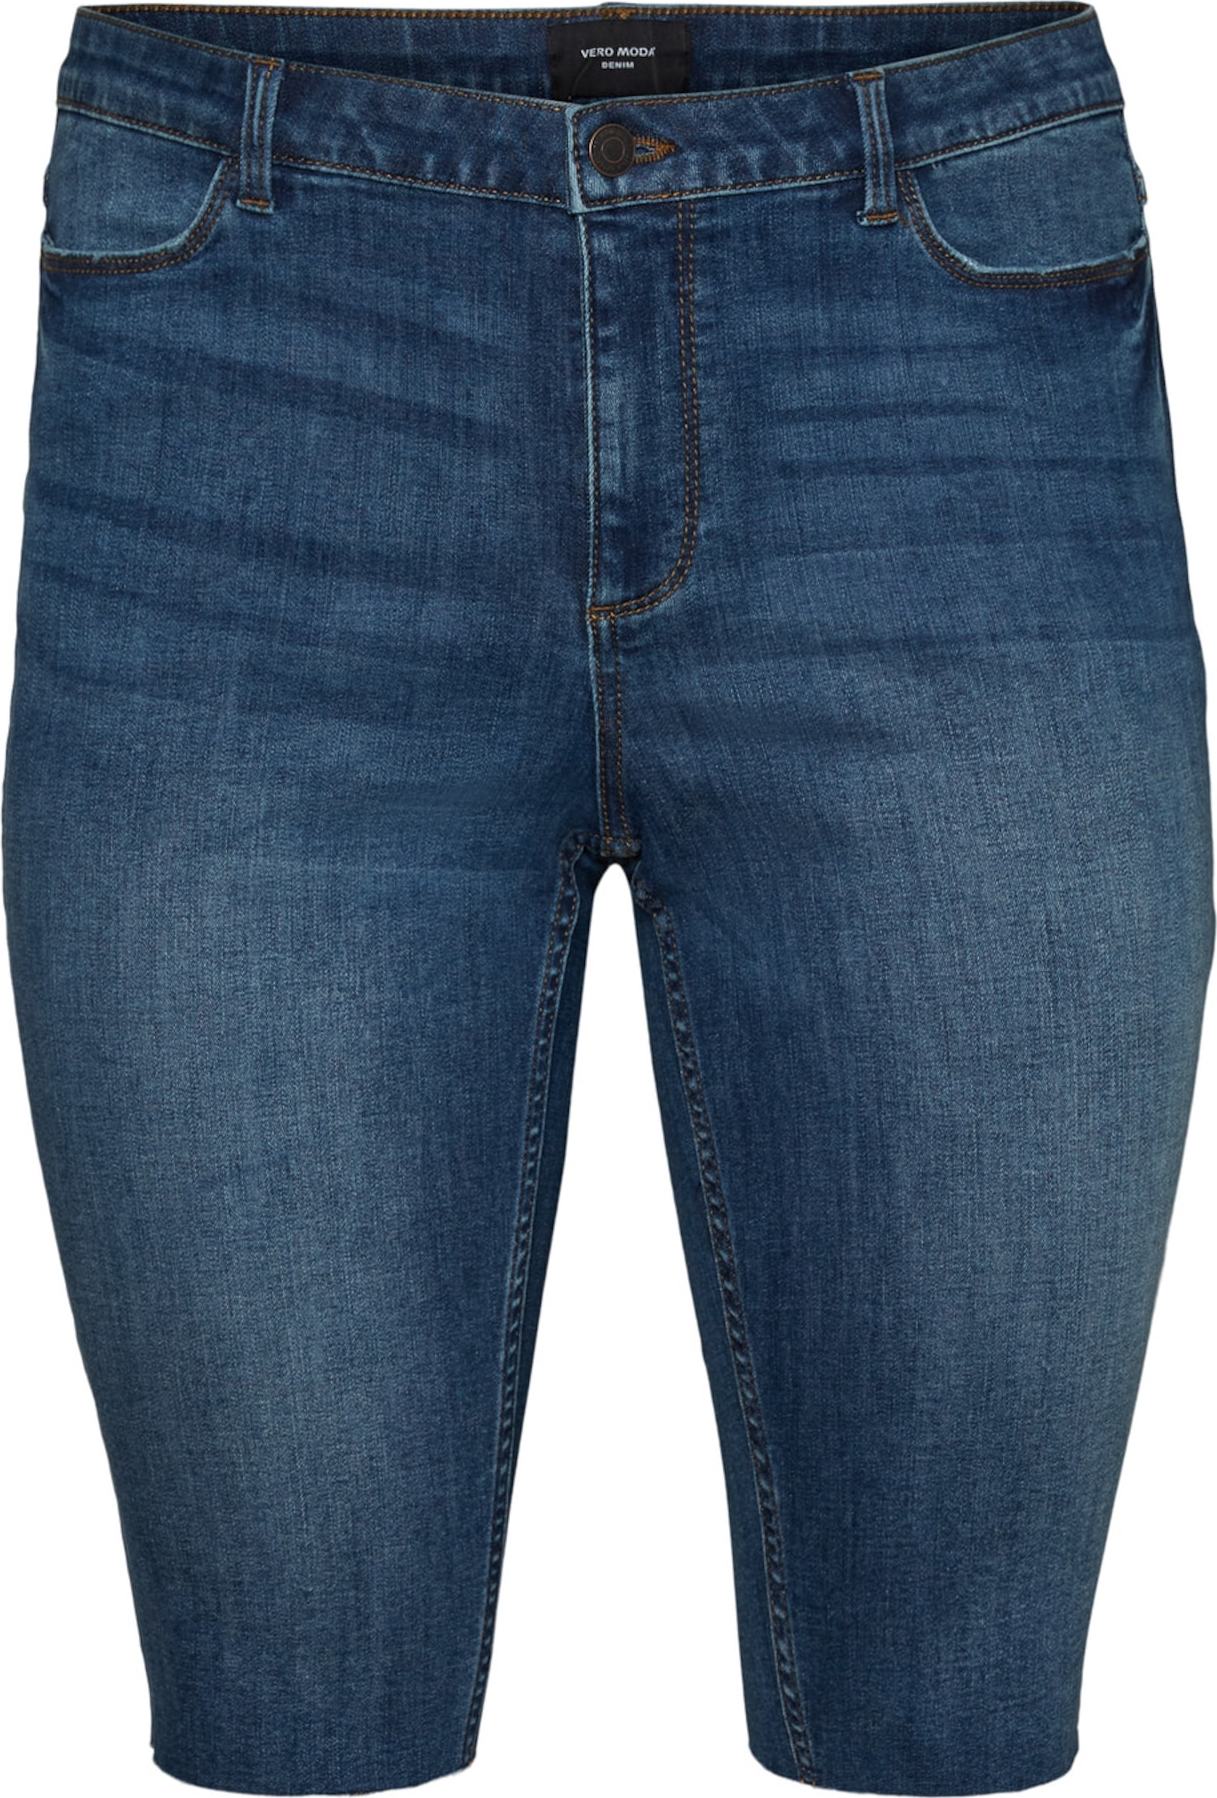 Vero Moda Curve Jeans modrá džínovina